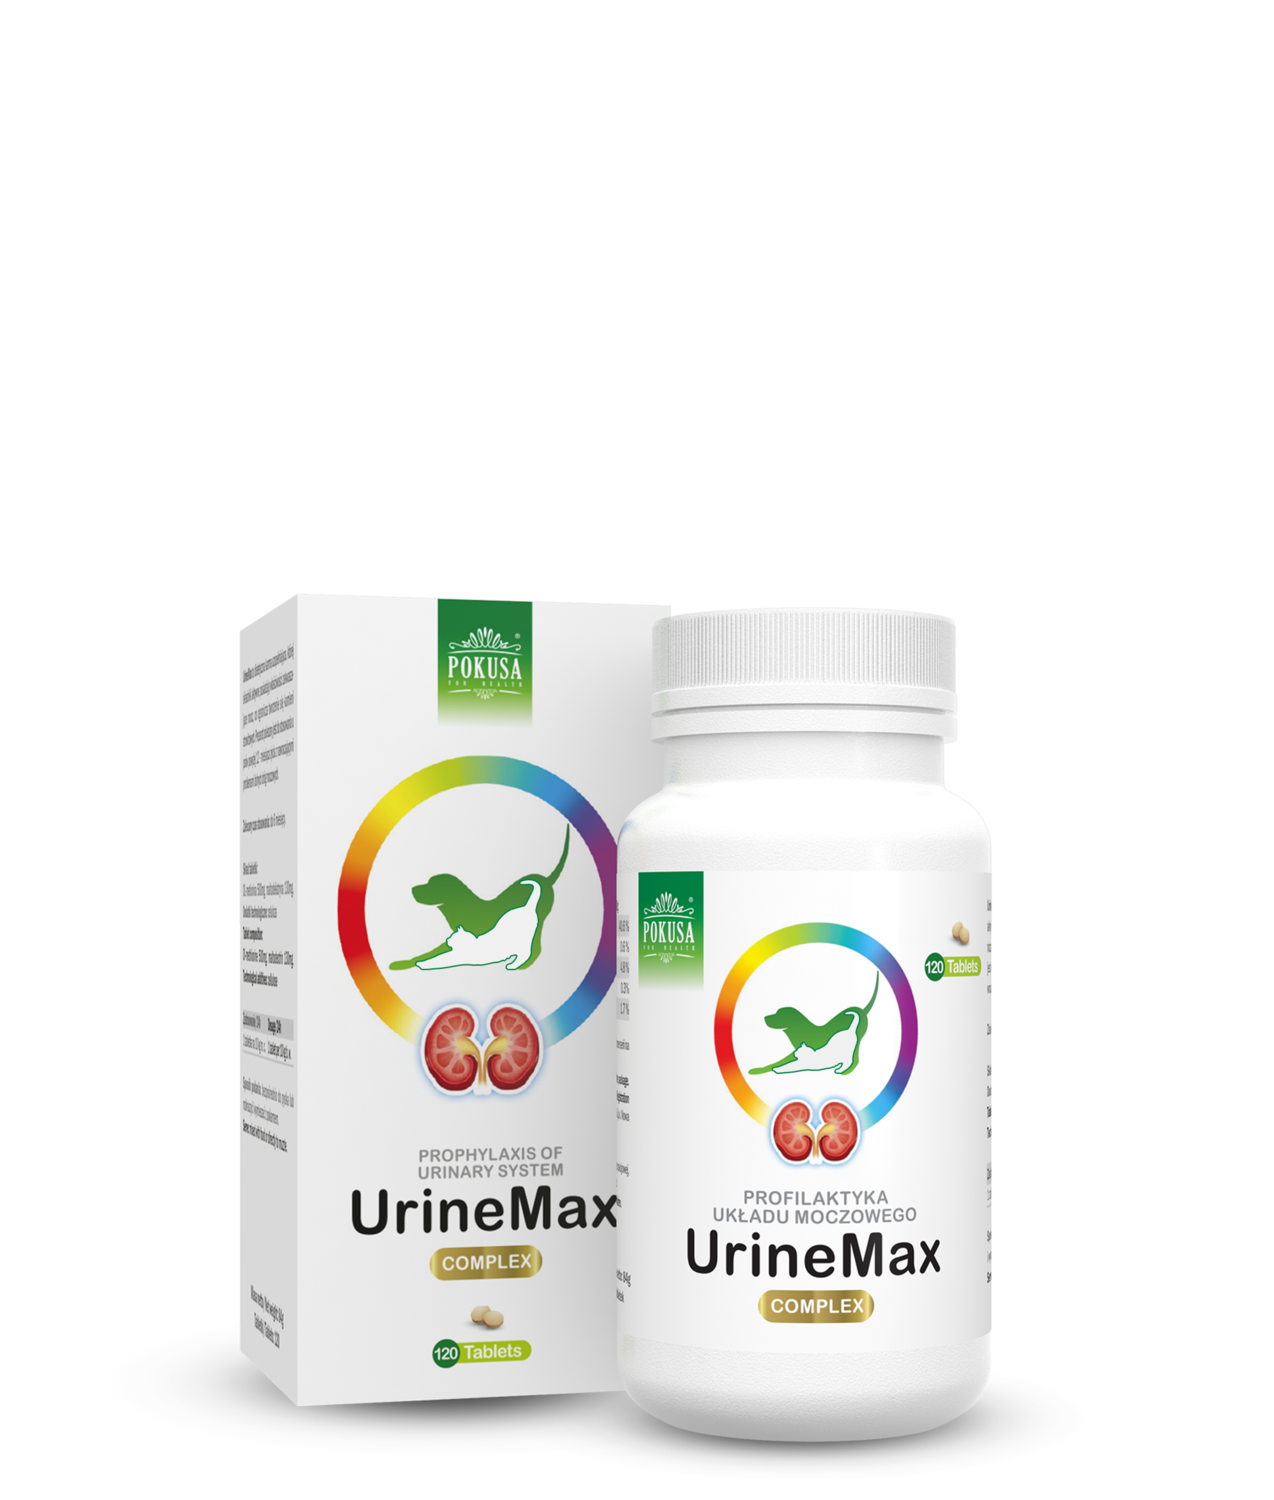 Pokusa UrineMax 120 tabletten